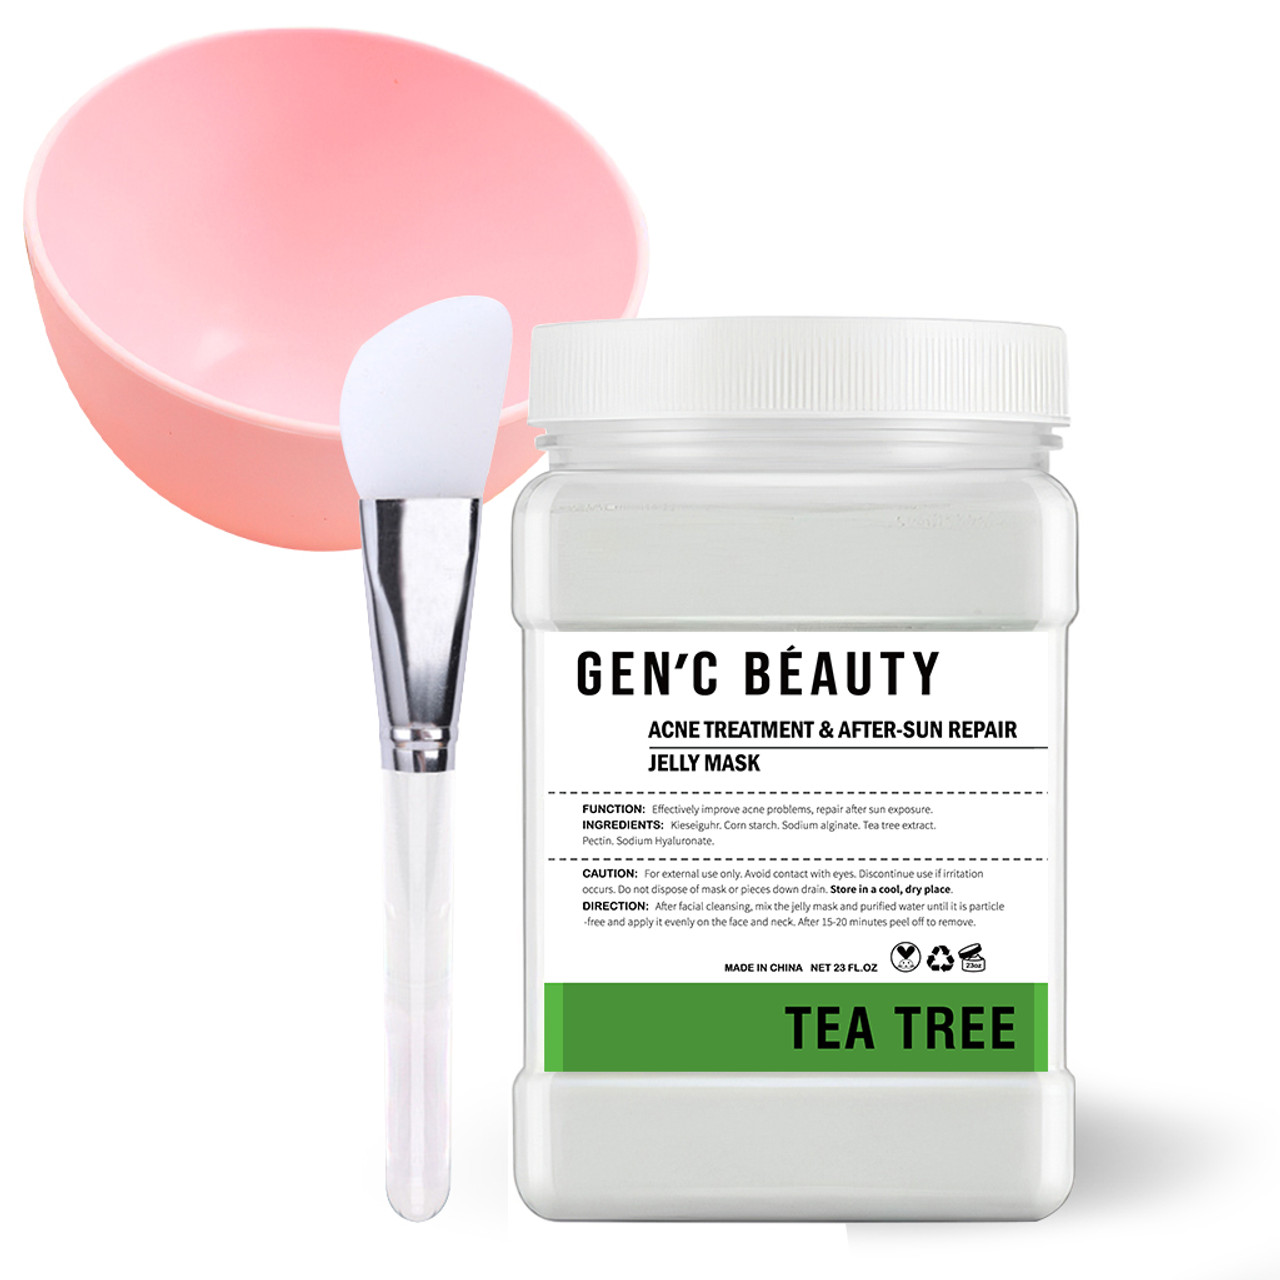 Mask Tree C and Repair Treatment - After Gen Tea Béauty 23 Jelly Acne Gen\'C Oz Beauty Sun